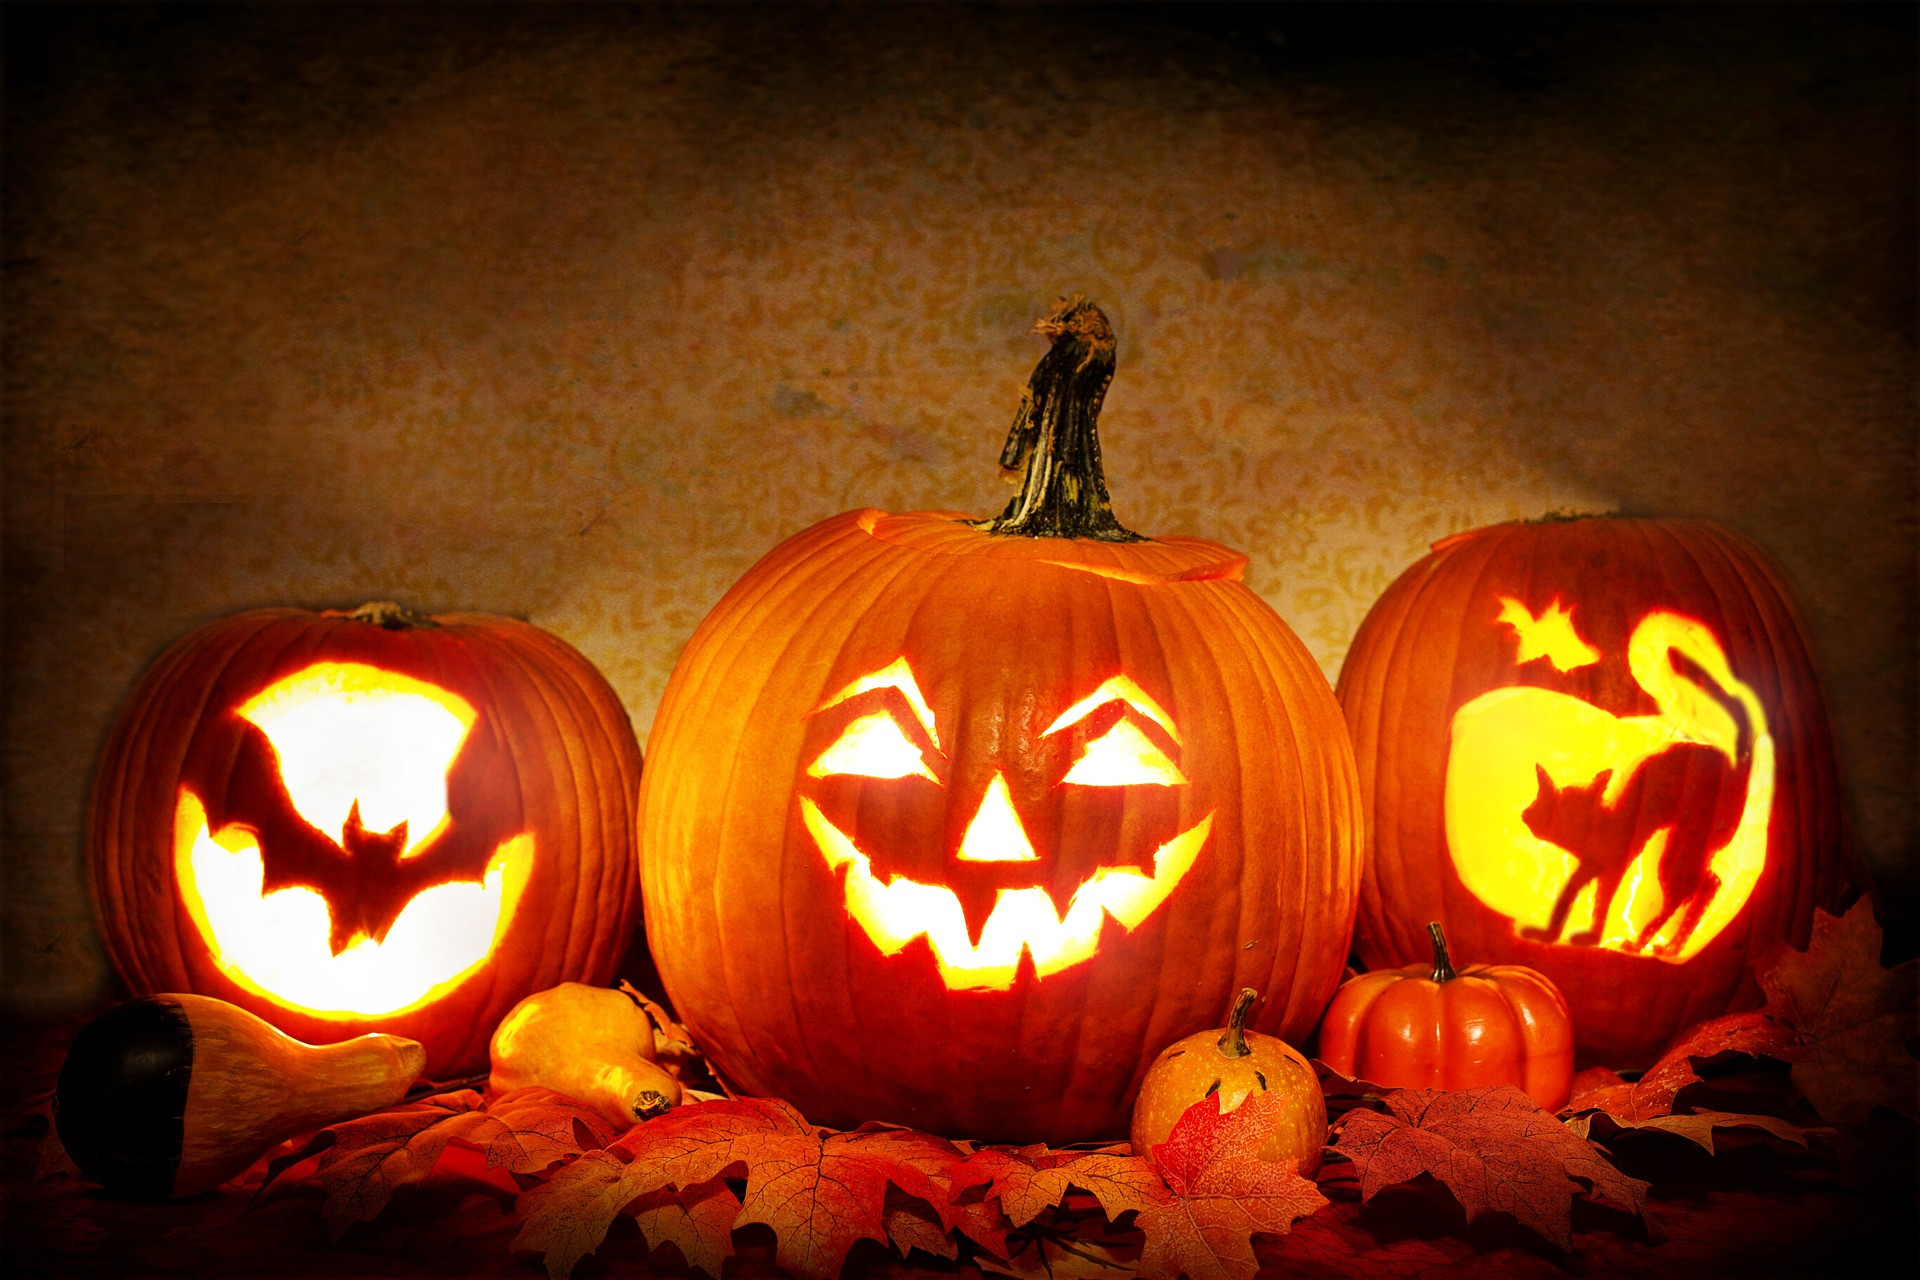 Mẫu mặt nạ halloween hình bí ngô cho bé | Halloween classroom decorations,  Pumpkin mask, Halloween masks